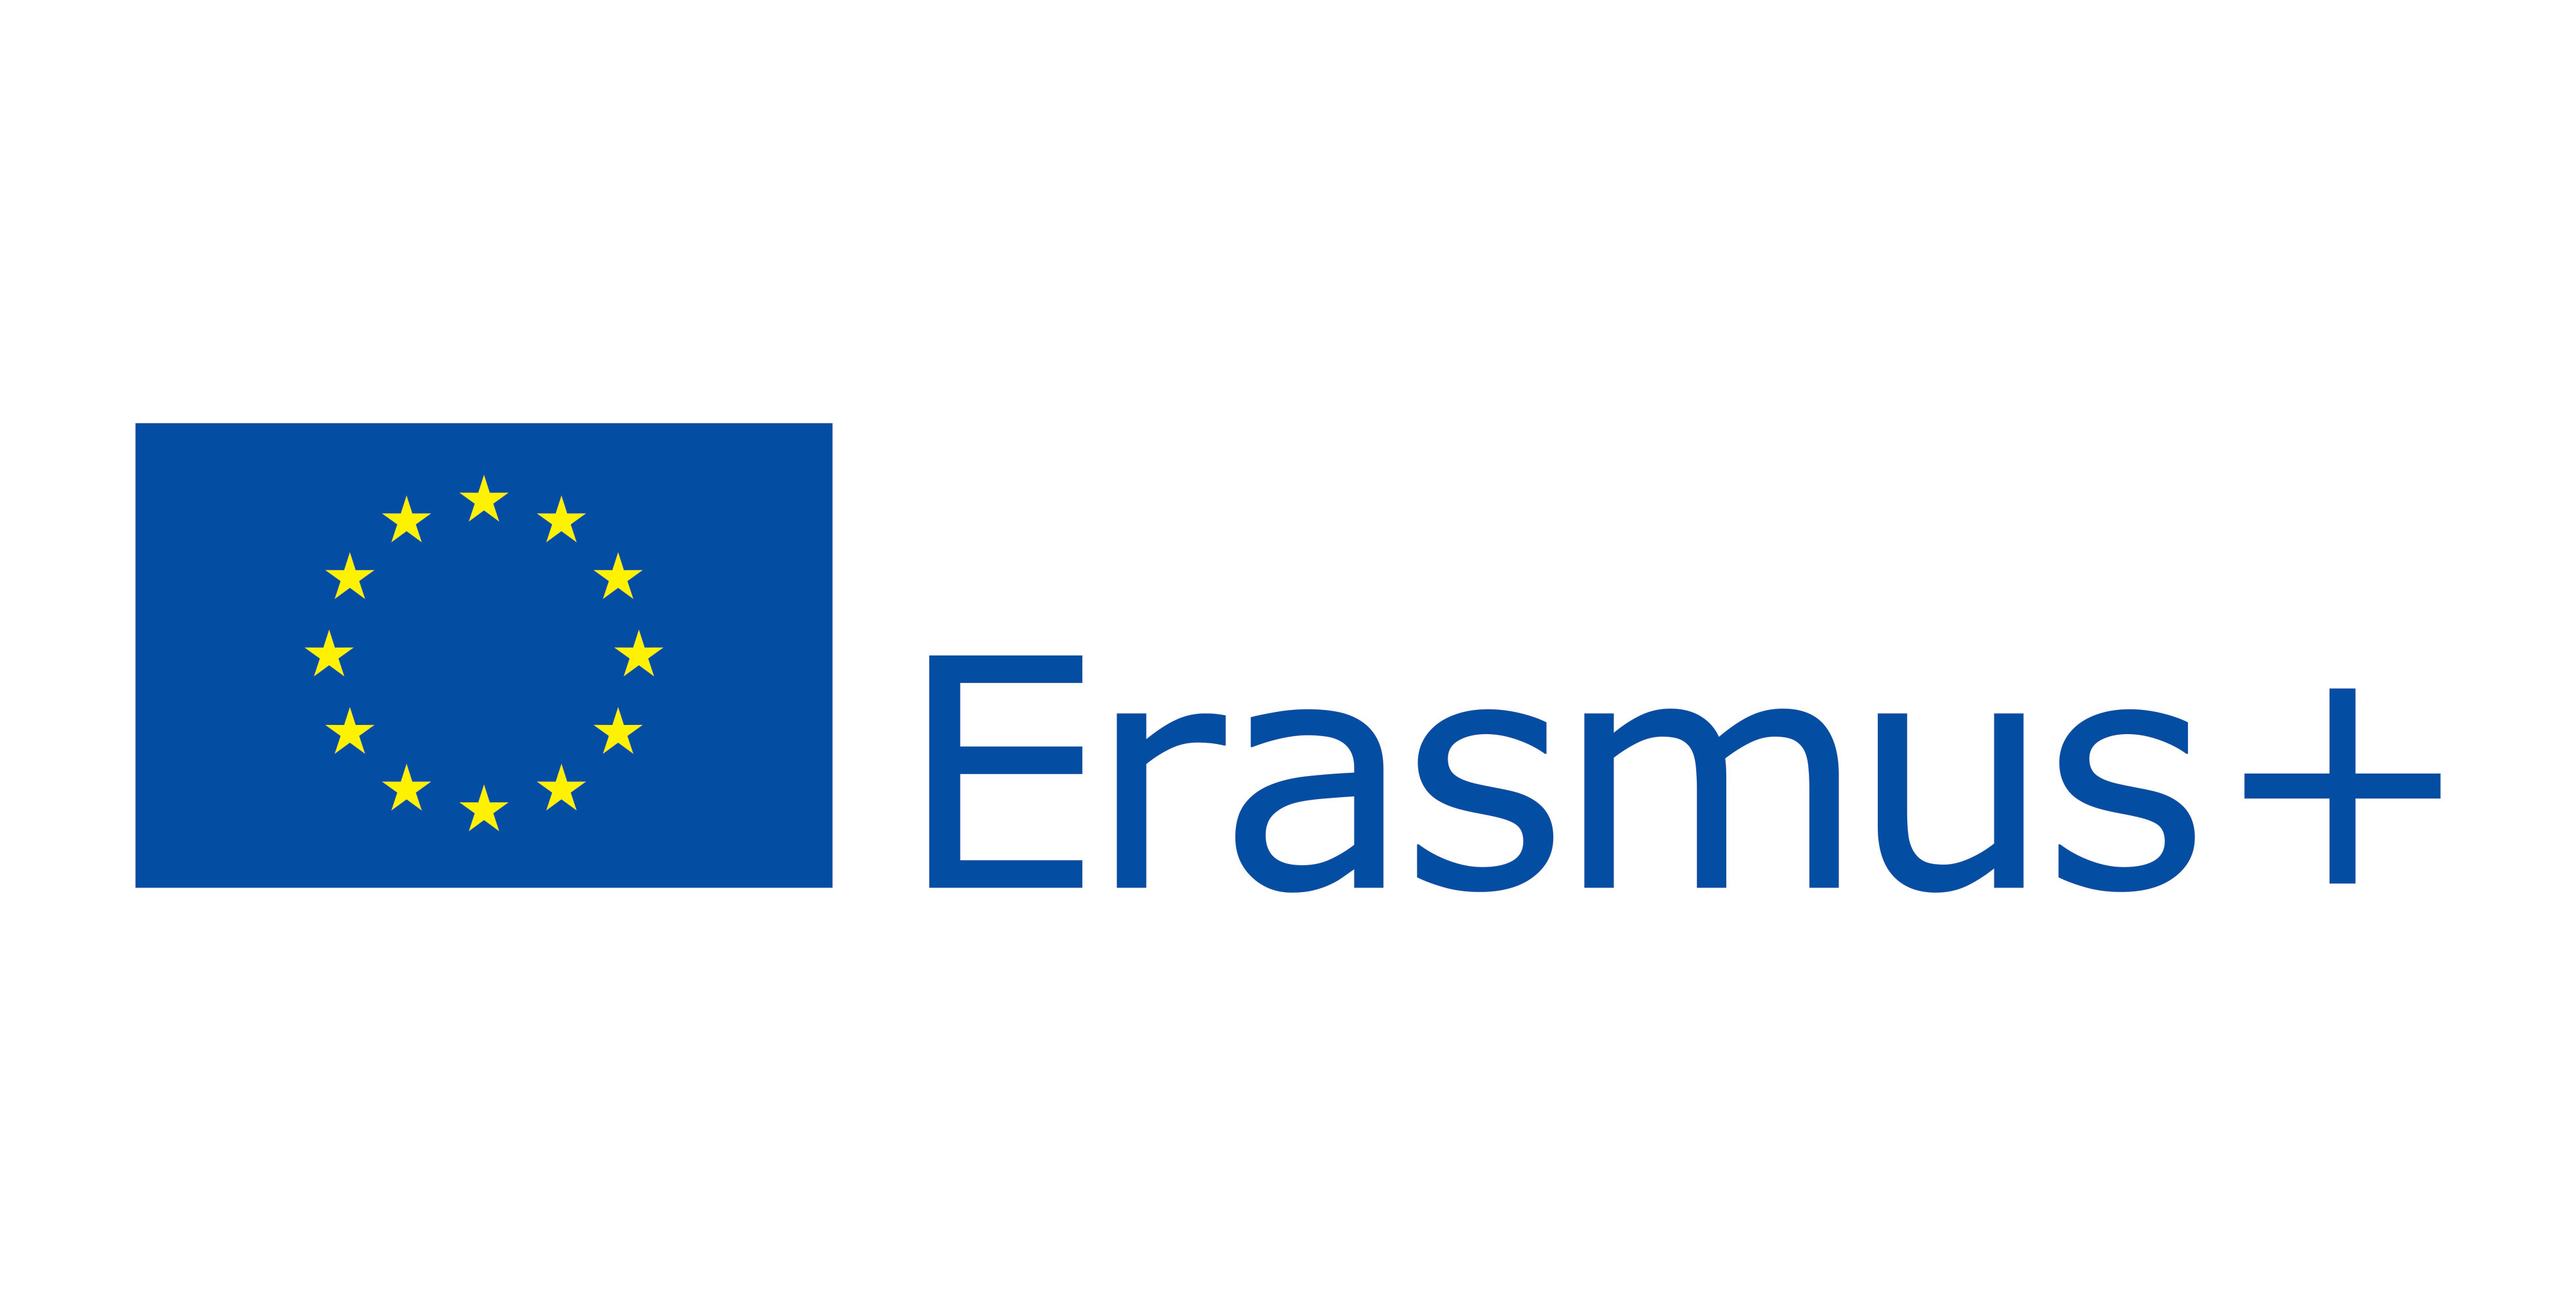 Erasmus%20%2B.jpg